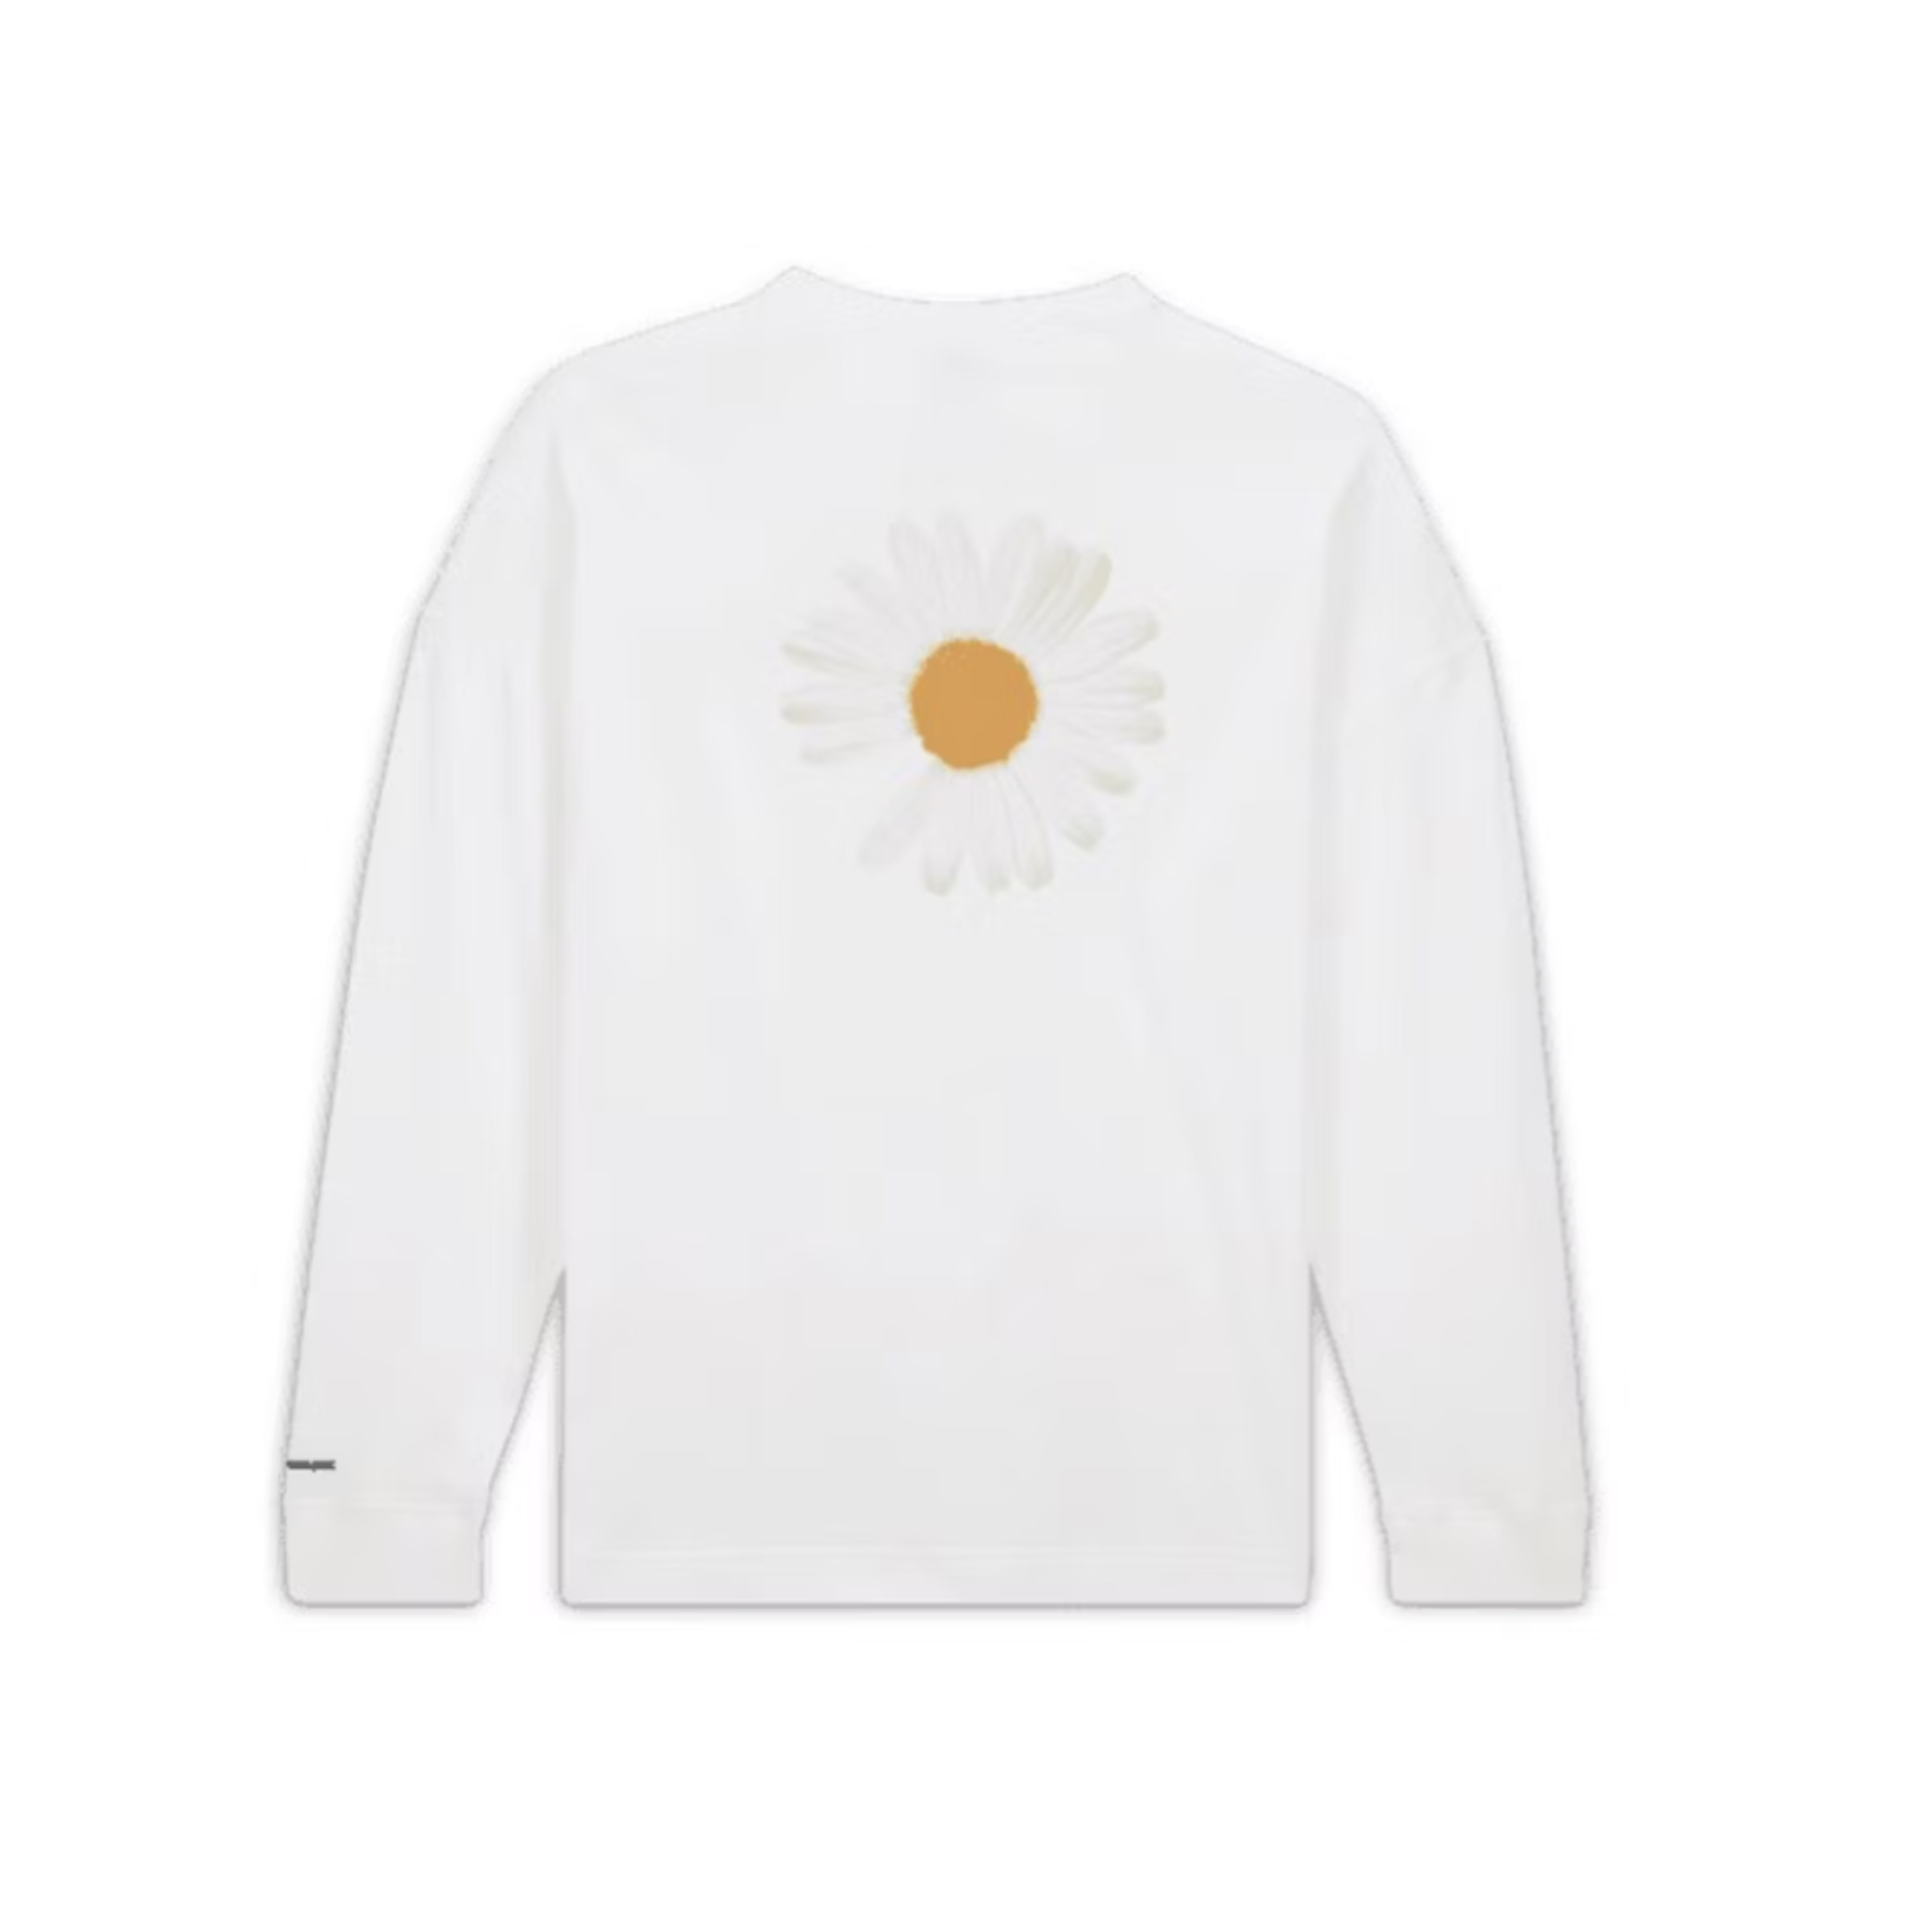 Nike x PEACEMINUSONE G-Dragon Long Sleeve T-shirt 'White' - DR0097 100